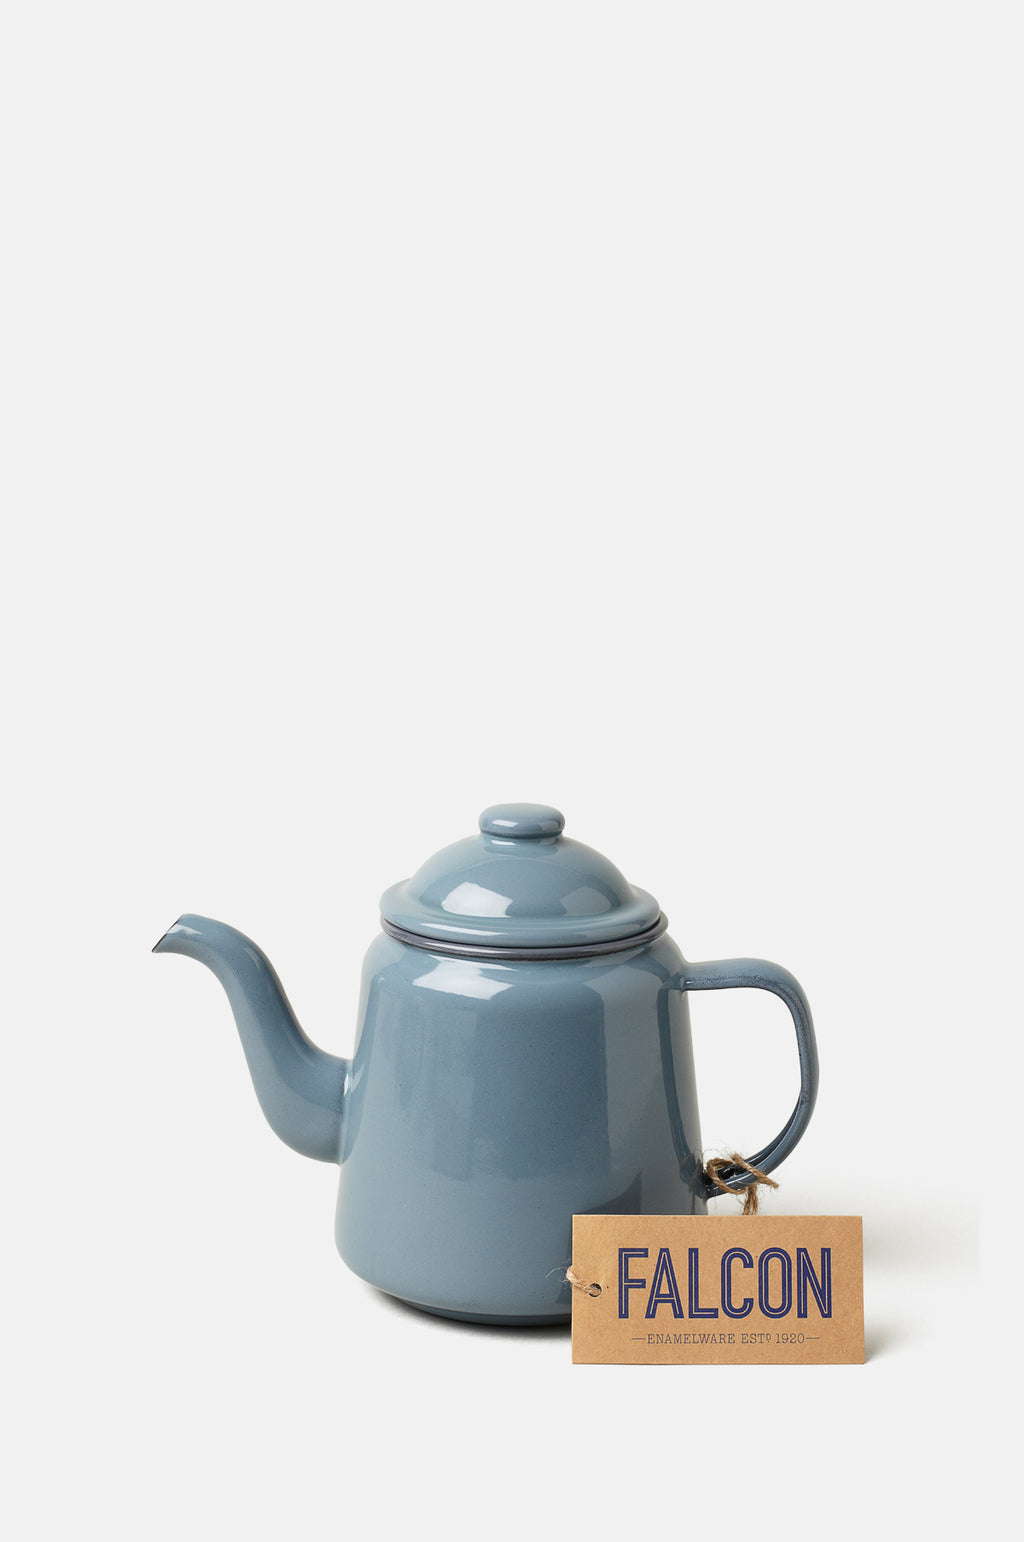 Falcon Enamelware Classic Teapot - Samphire